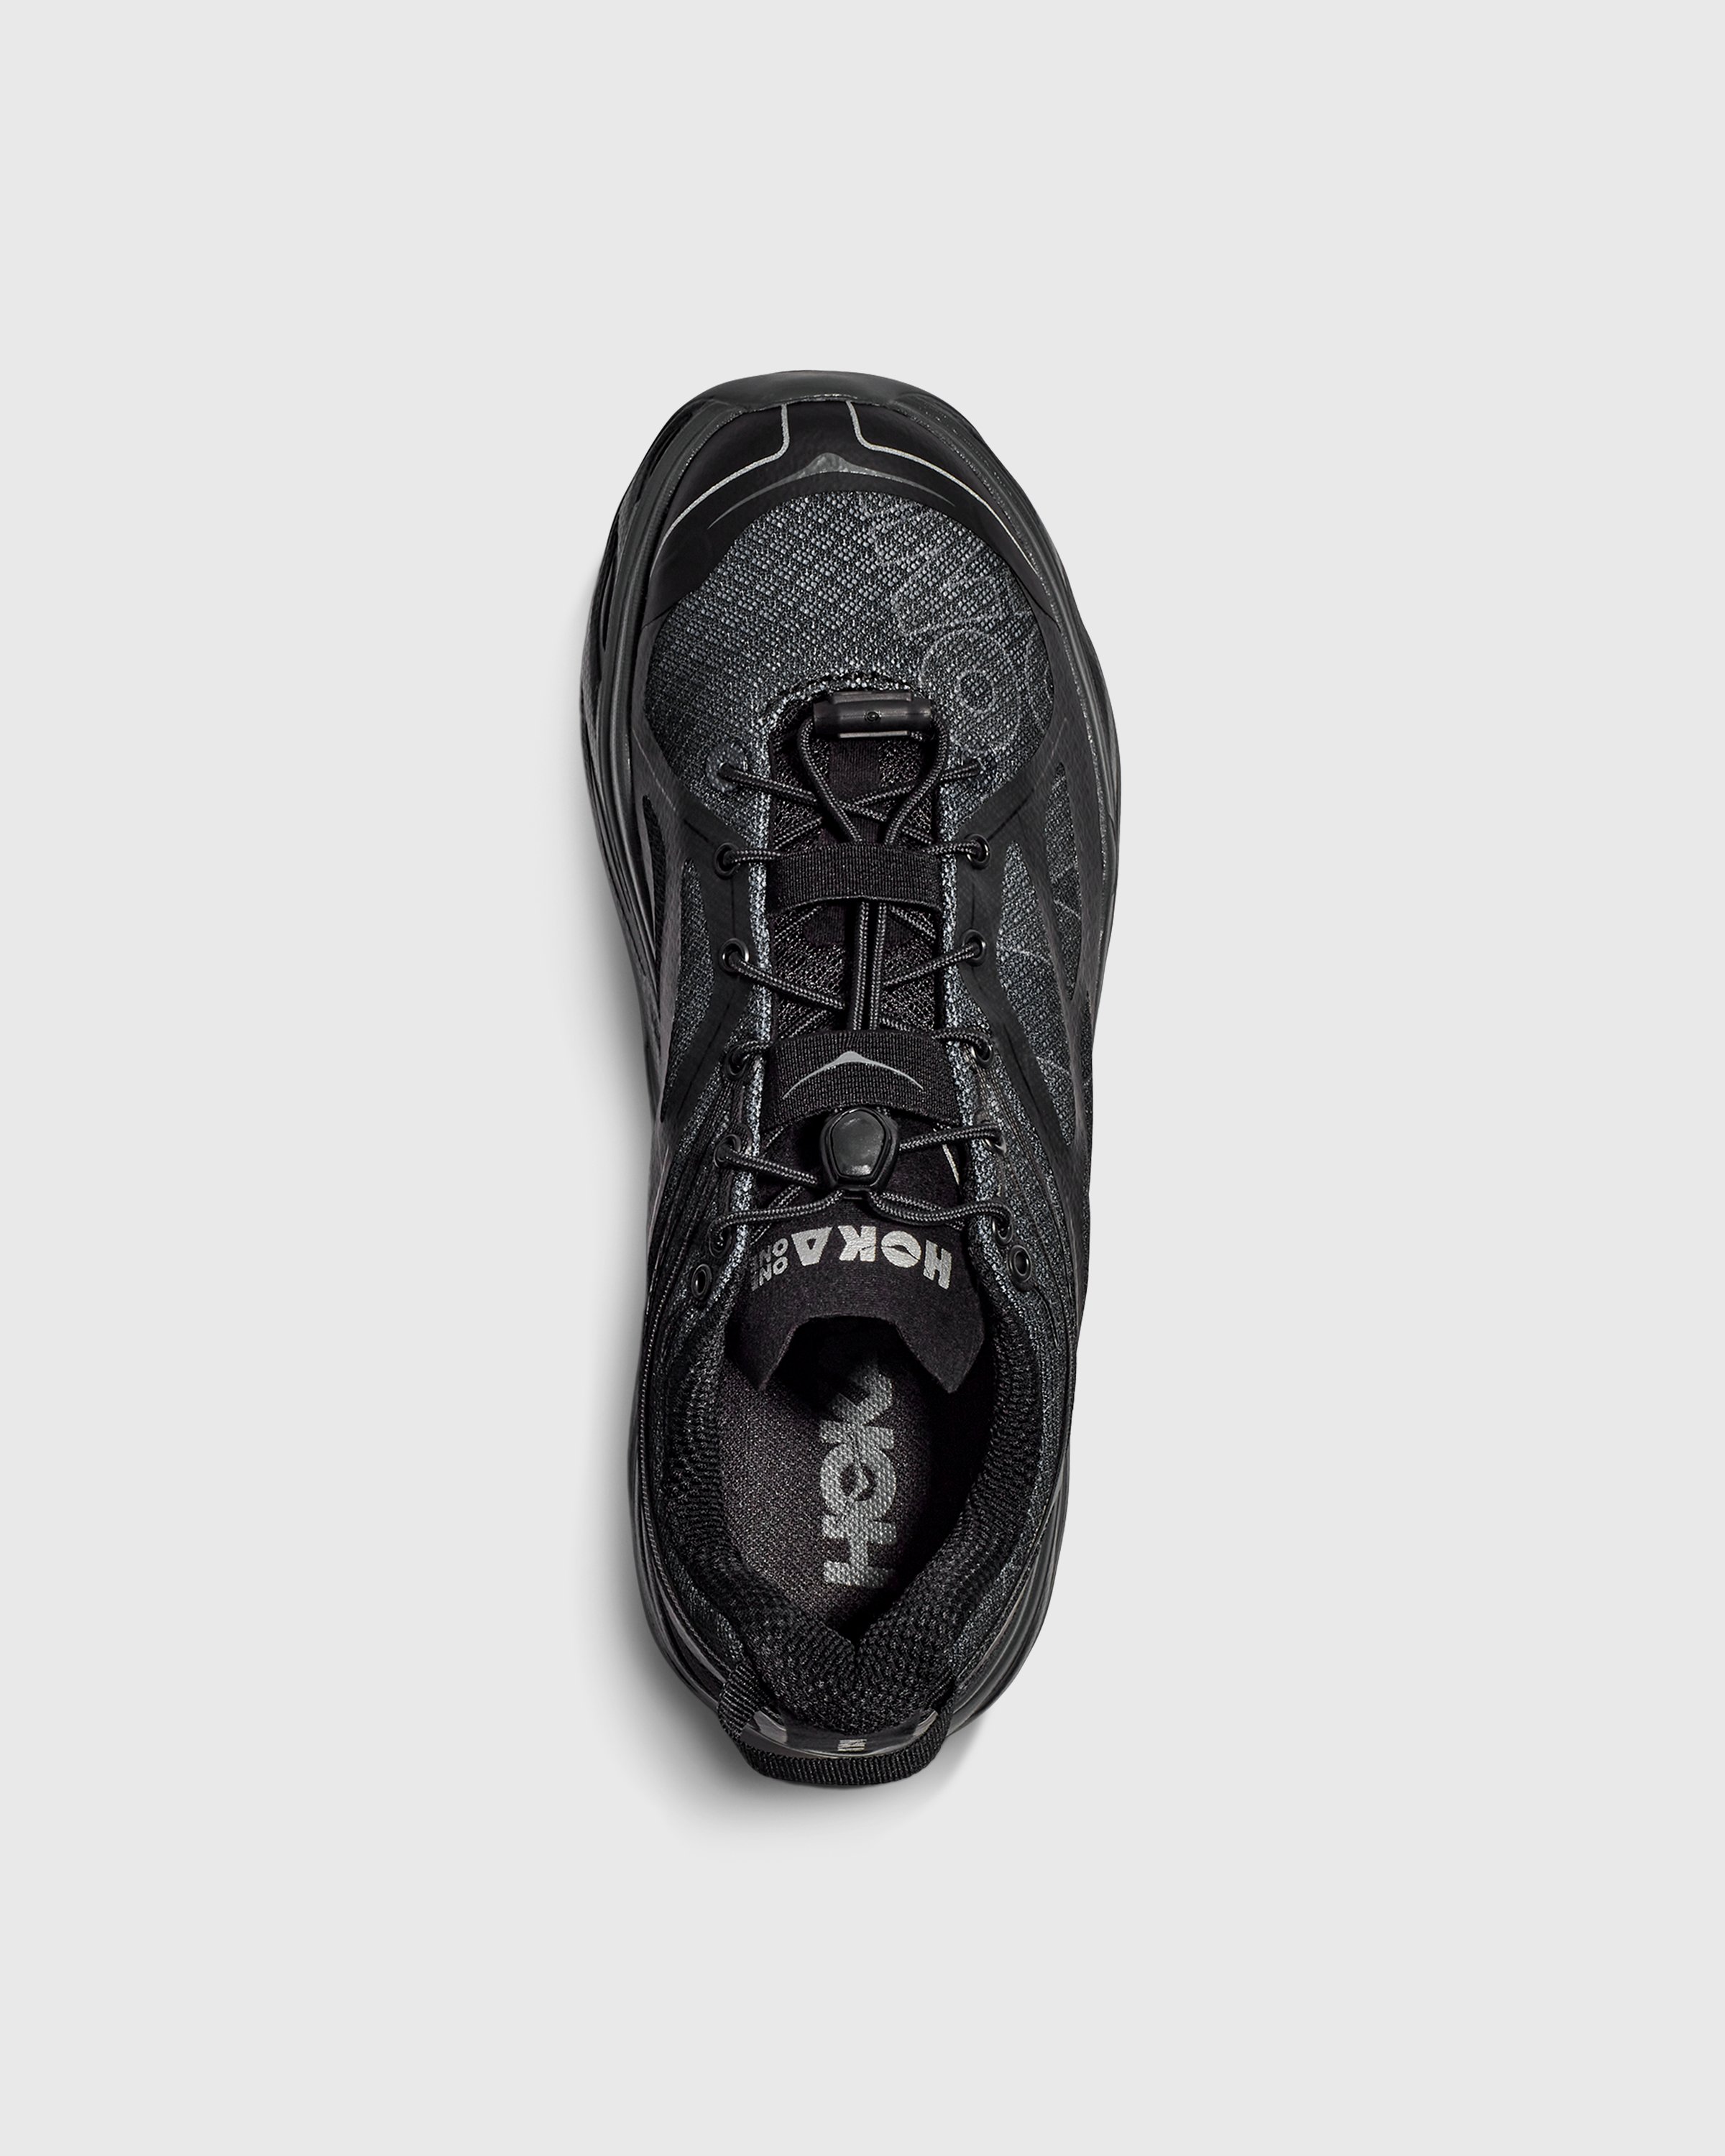 HOKA - HUAKA ORIGINS Black - Footwear - Black - Image 3